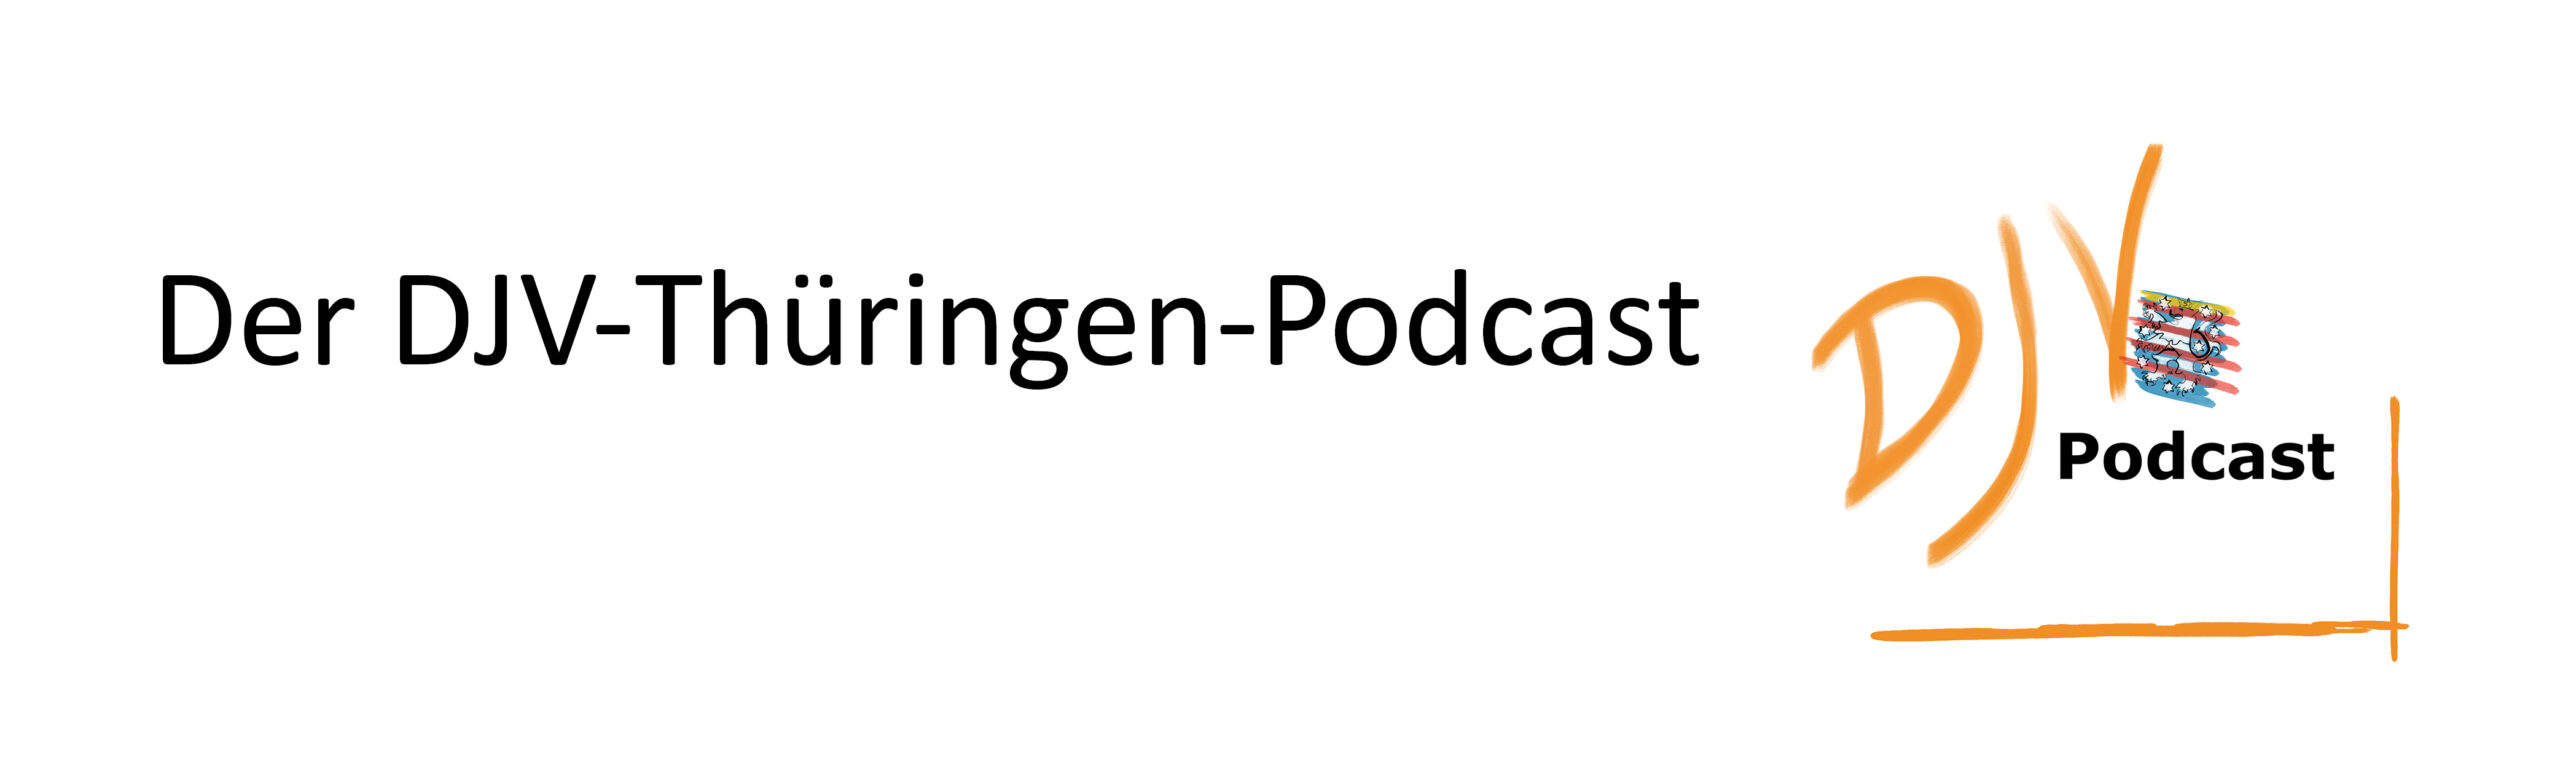 Podcastheader DJV Thüringen